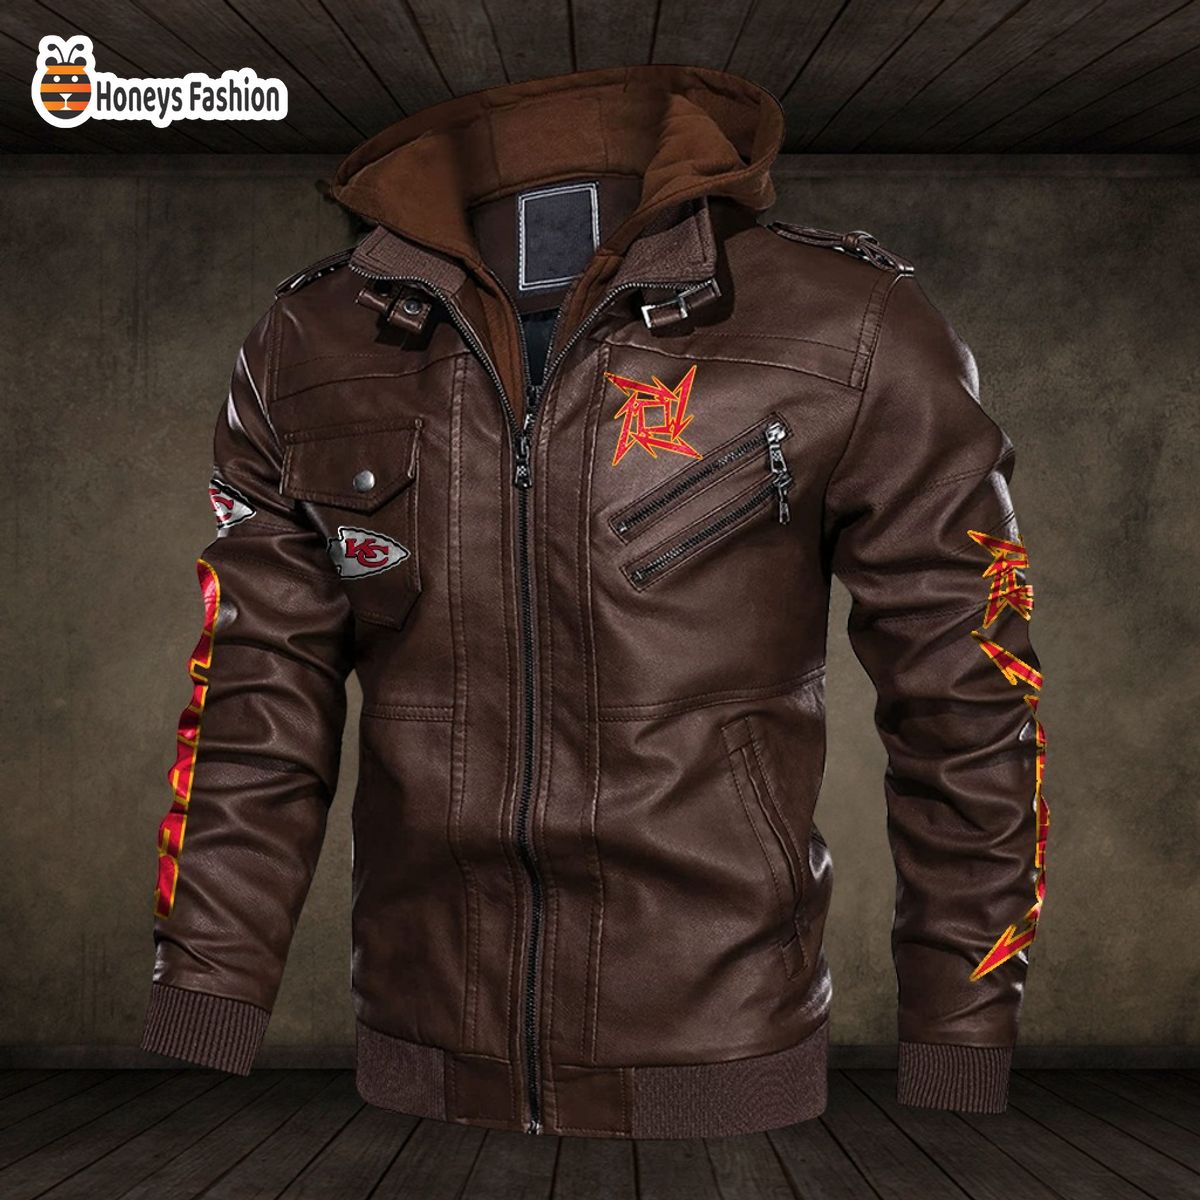 Kansas City Chiefs NFL Metallica 2D PU Leather Jacket